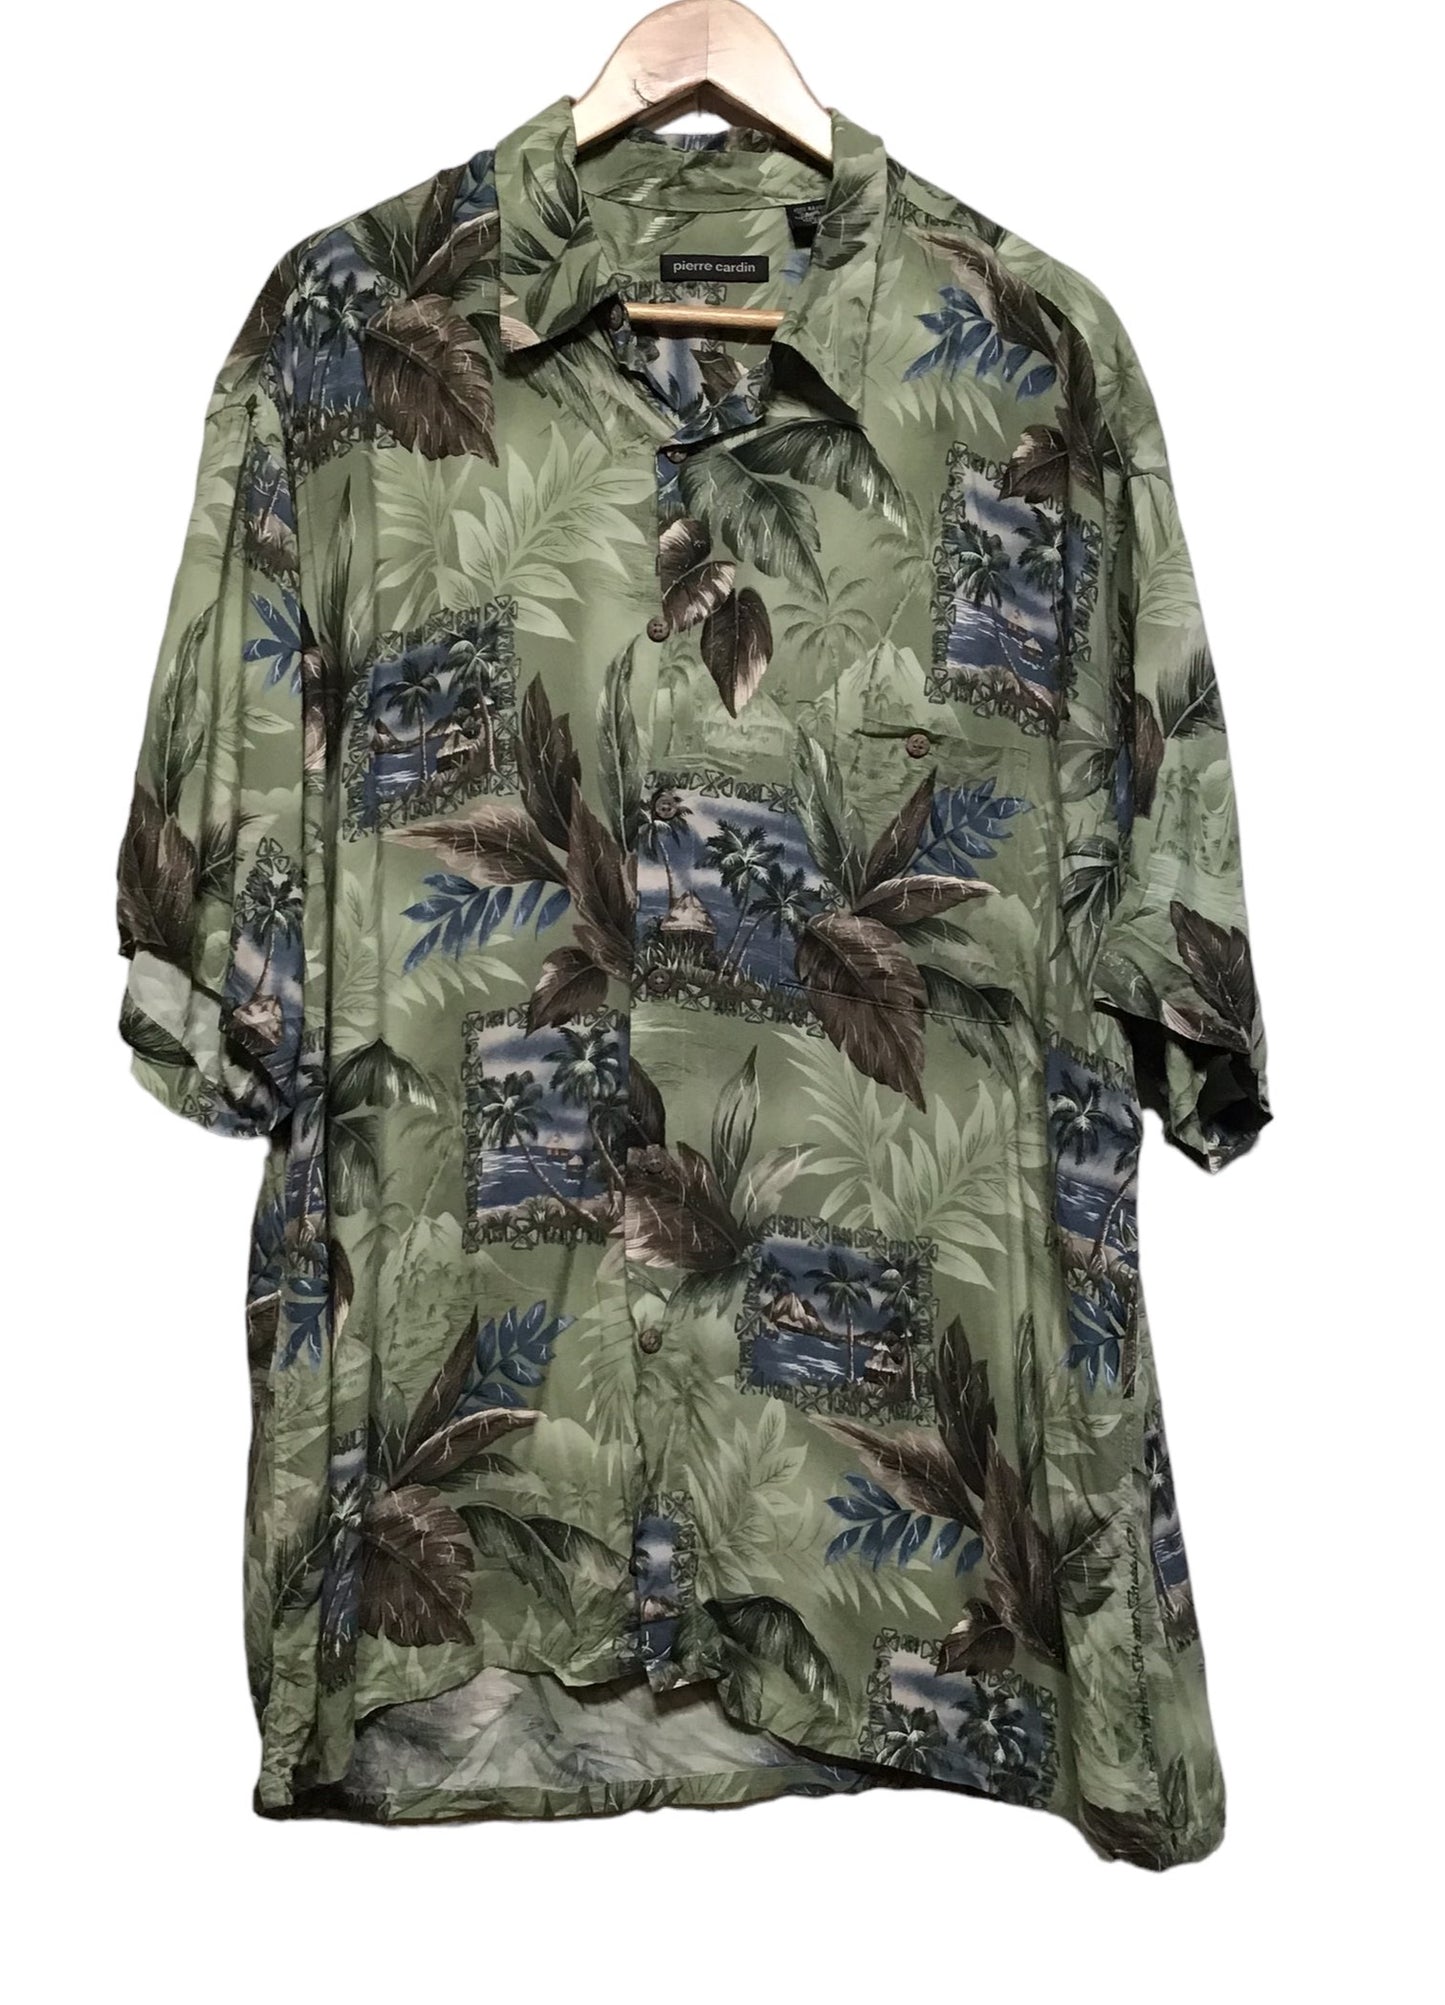 Pierre Cardin Shirt (Size XL)